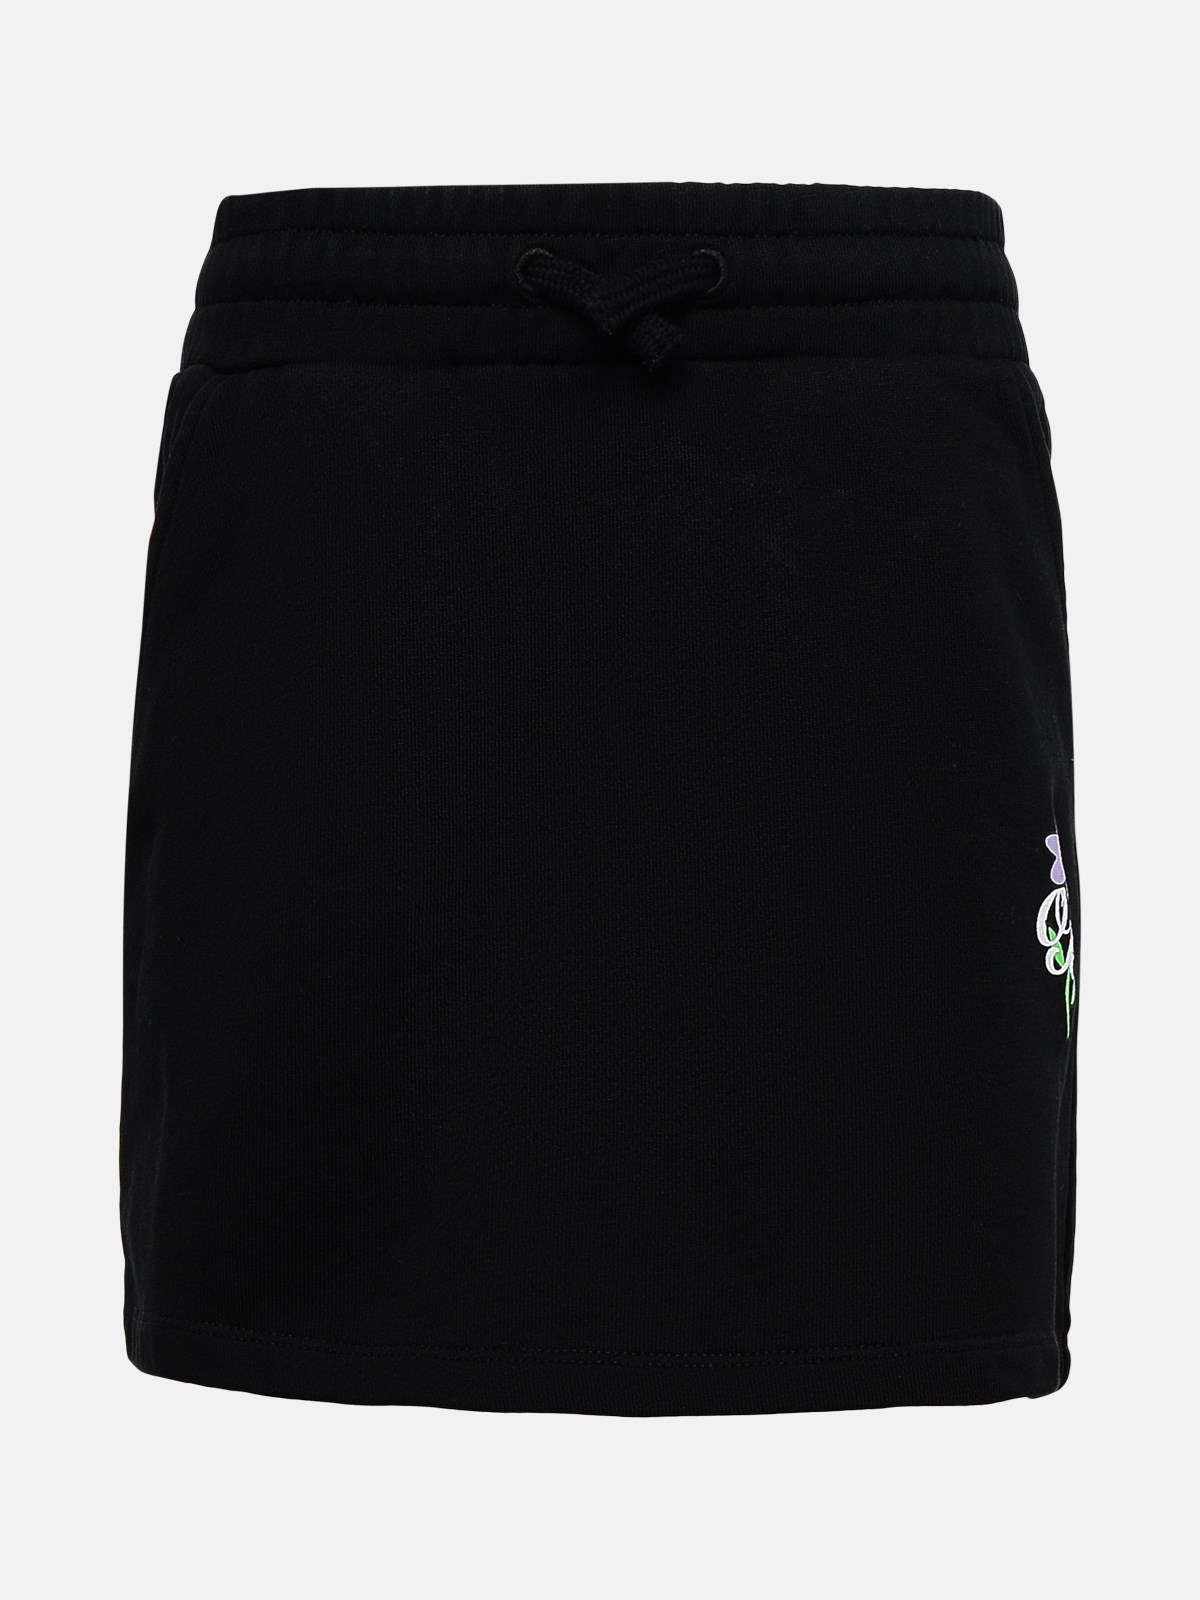 Off-white Black Cotton Skirt